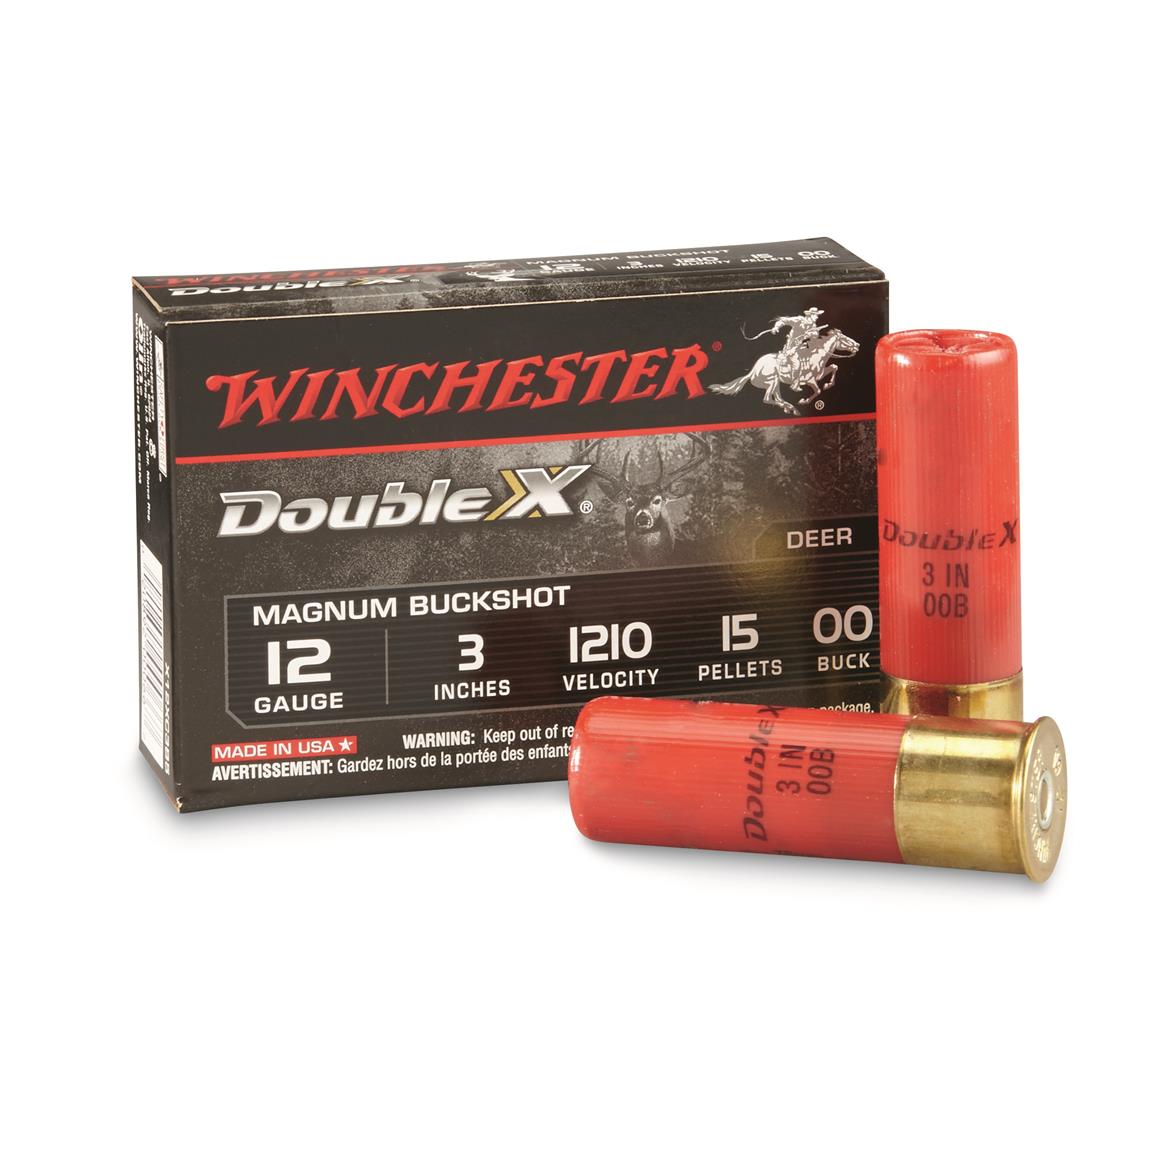 Winchester Double X Magnum Buckshot 12 Gauge 3 00 Buck 5 Rounds